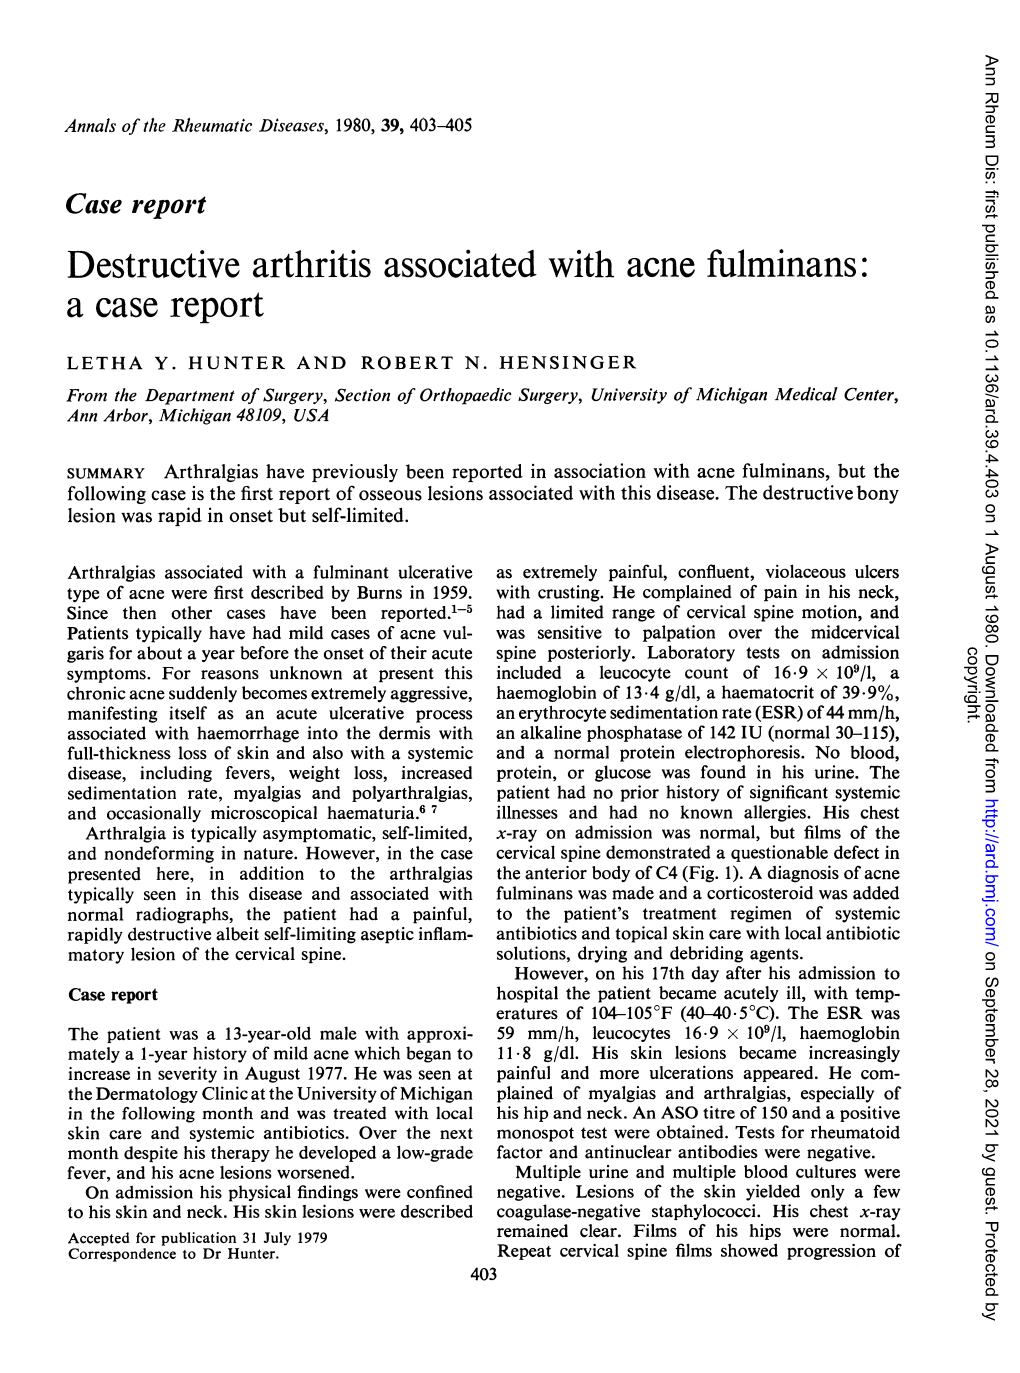 Destructive Arthritis Associated with Acne Fulminans: a Case Report